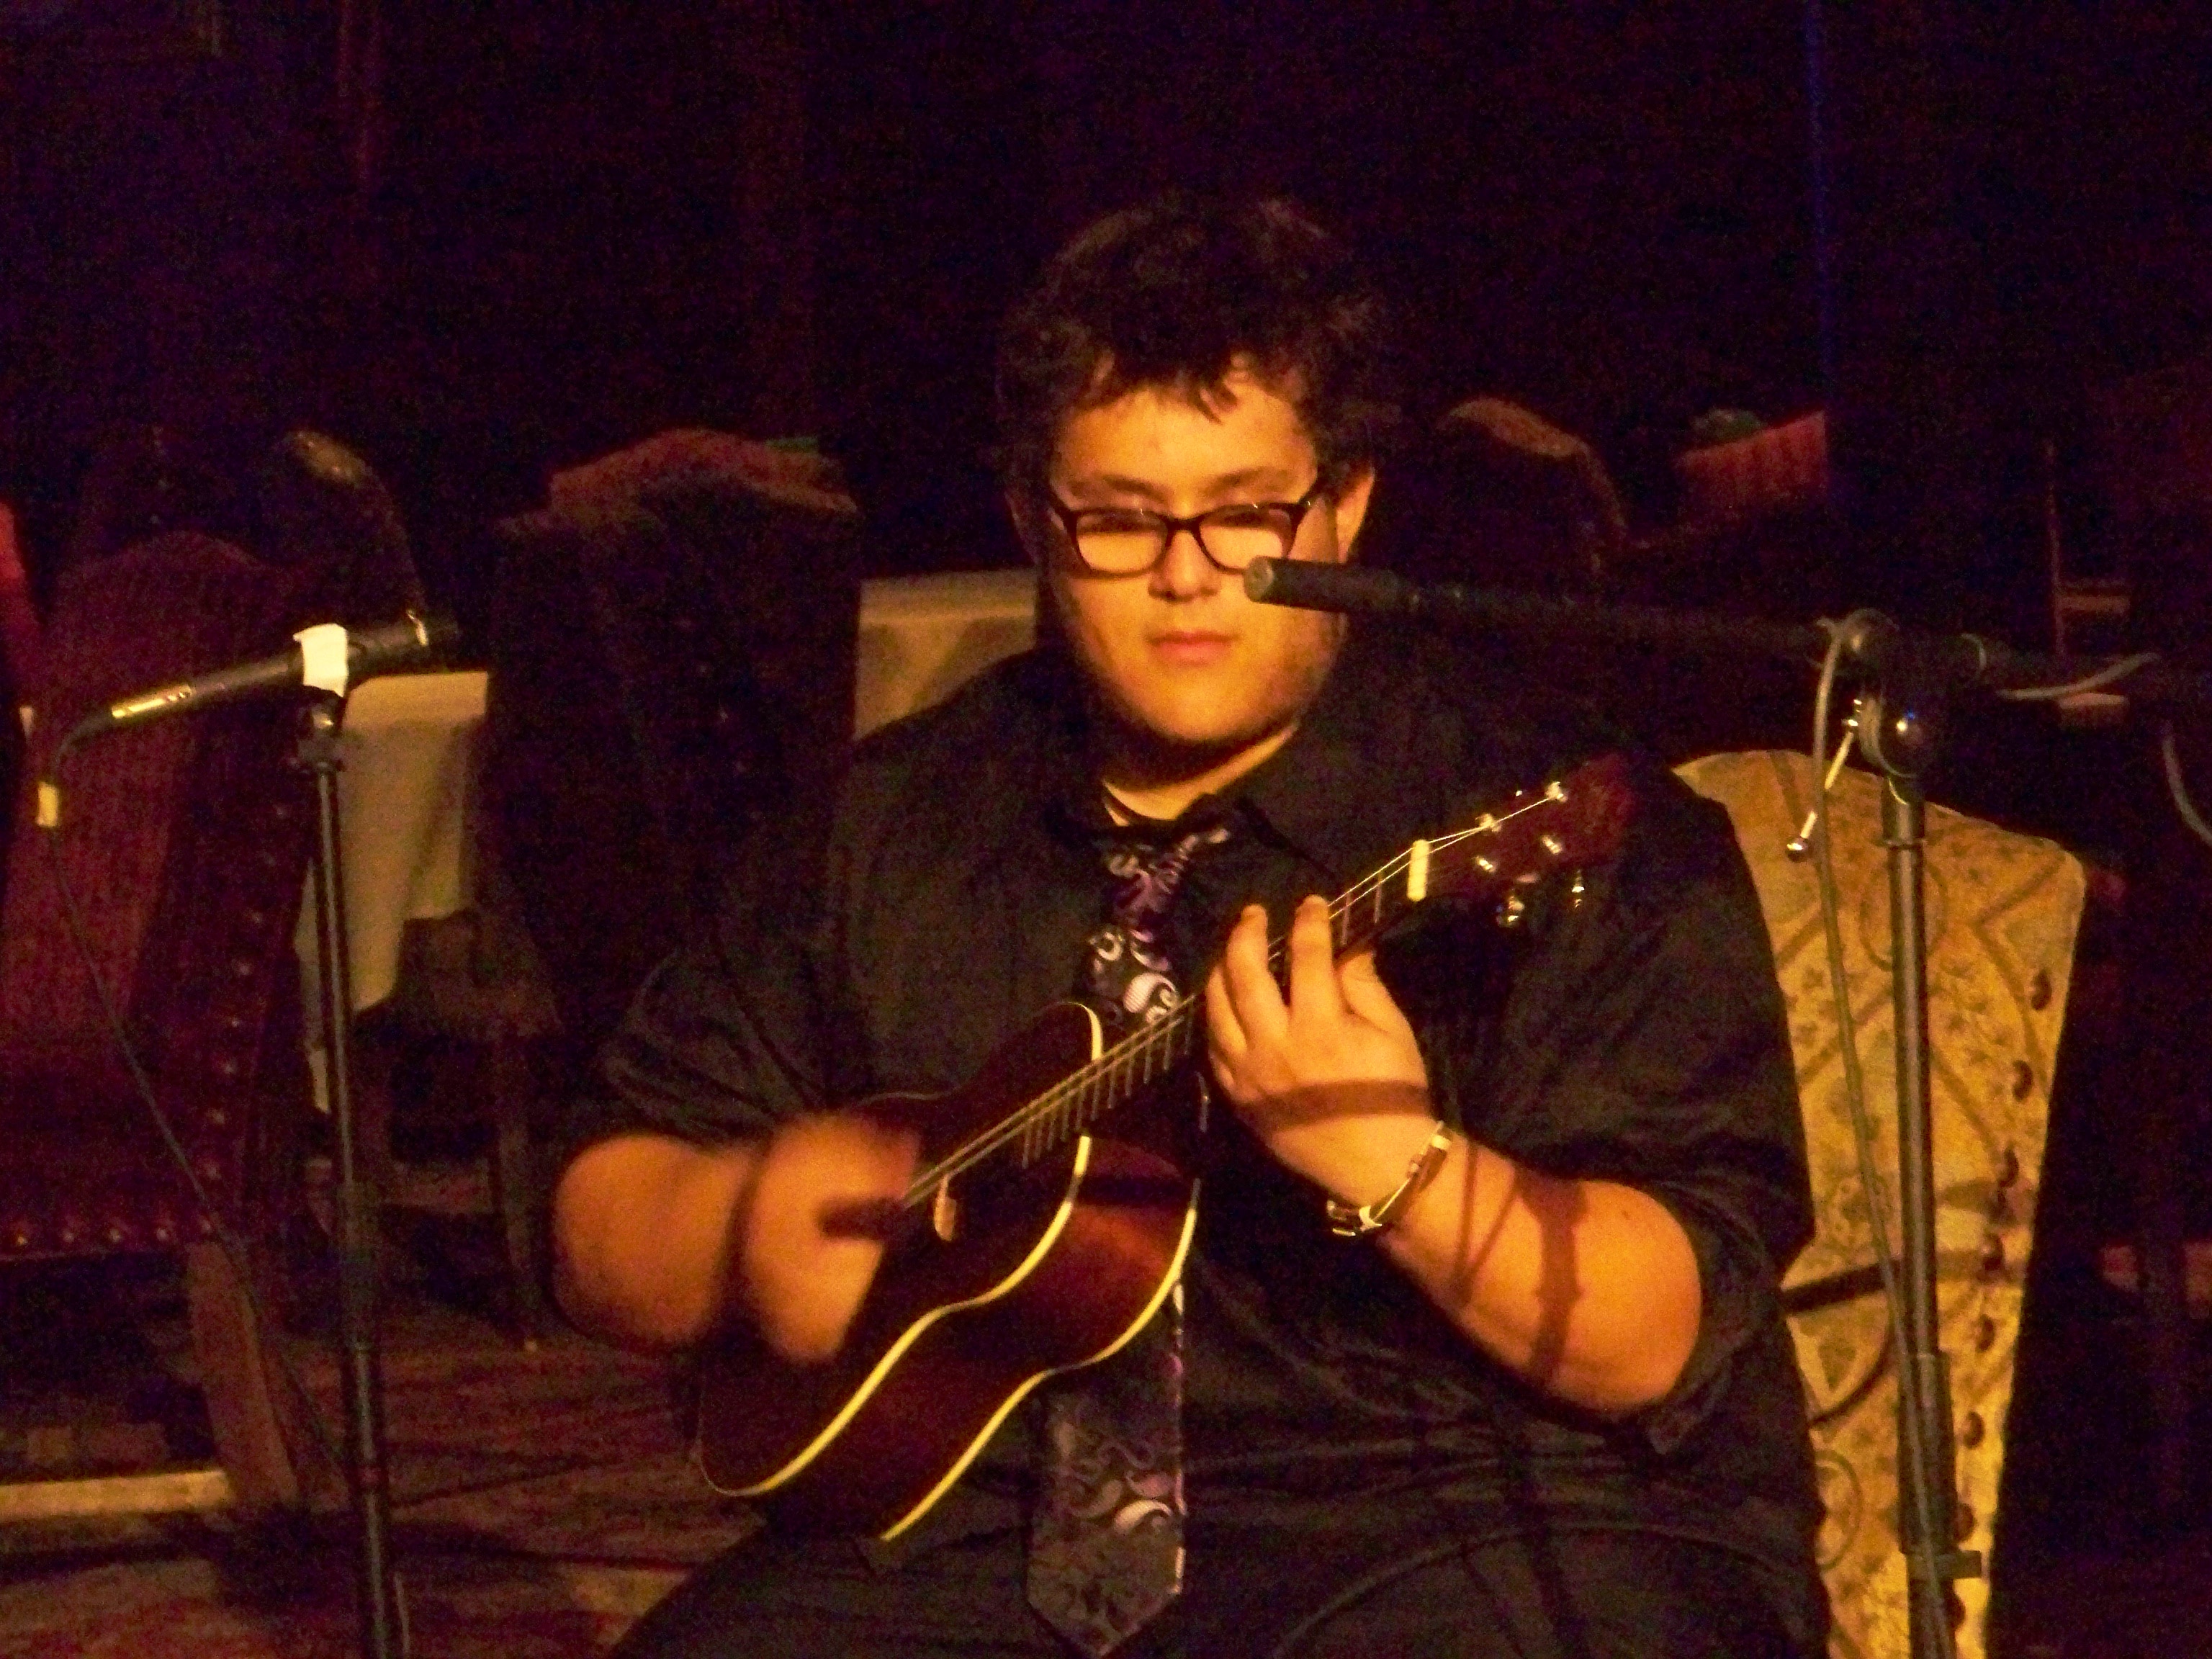 Ari Stidham performs at the Canyon Club